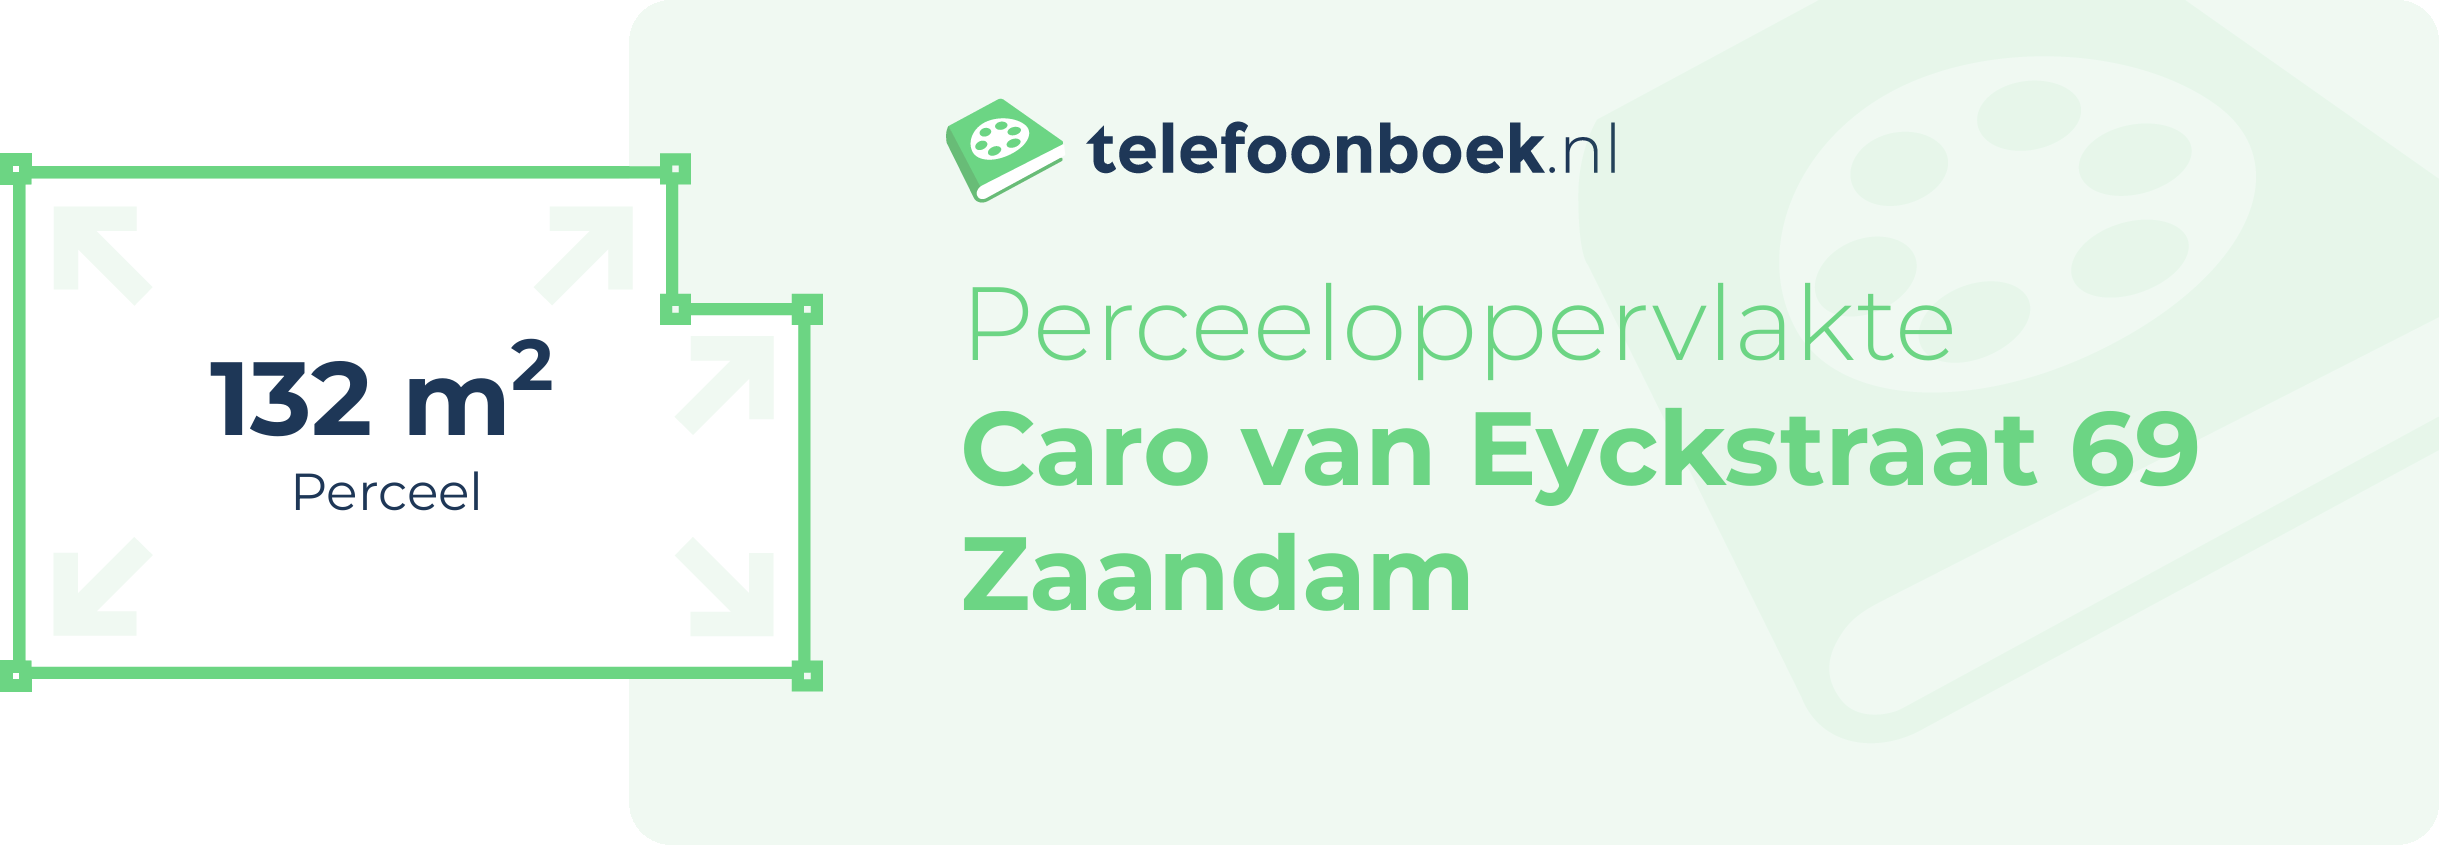 Perceeloppervlakte Caro Van Eyckstraat 69 Zaandam